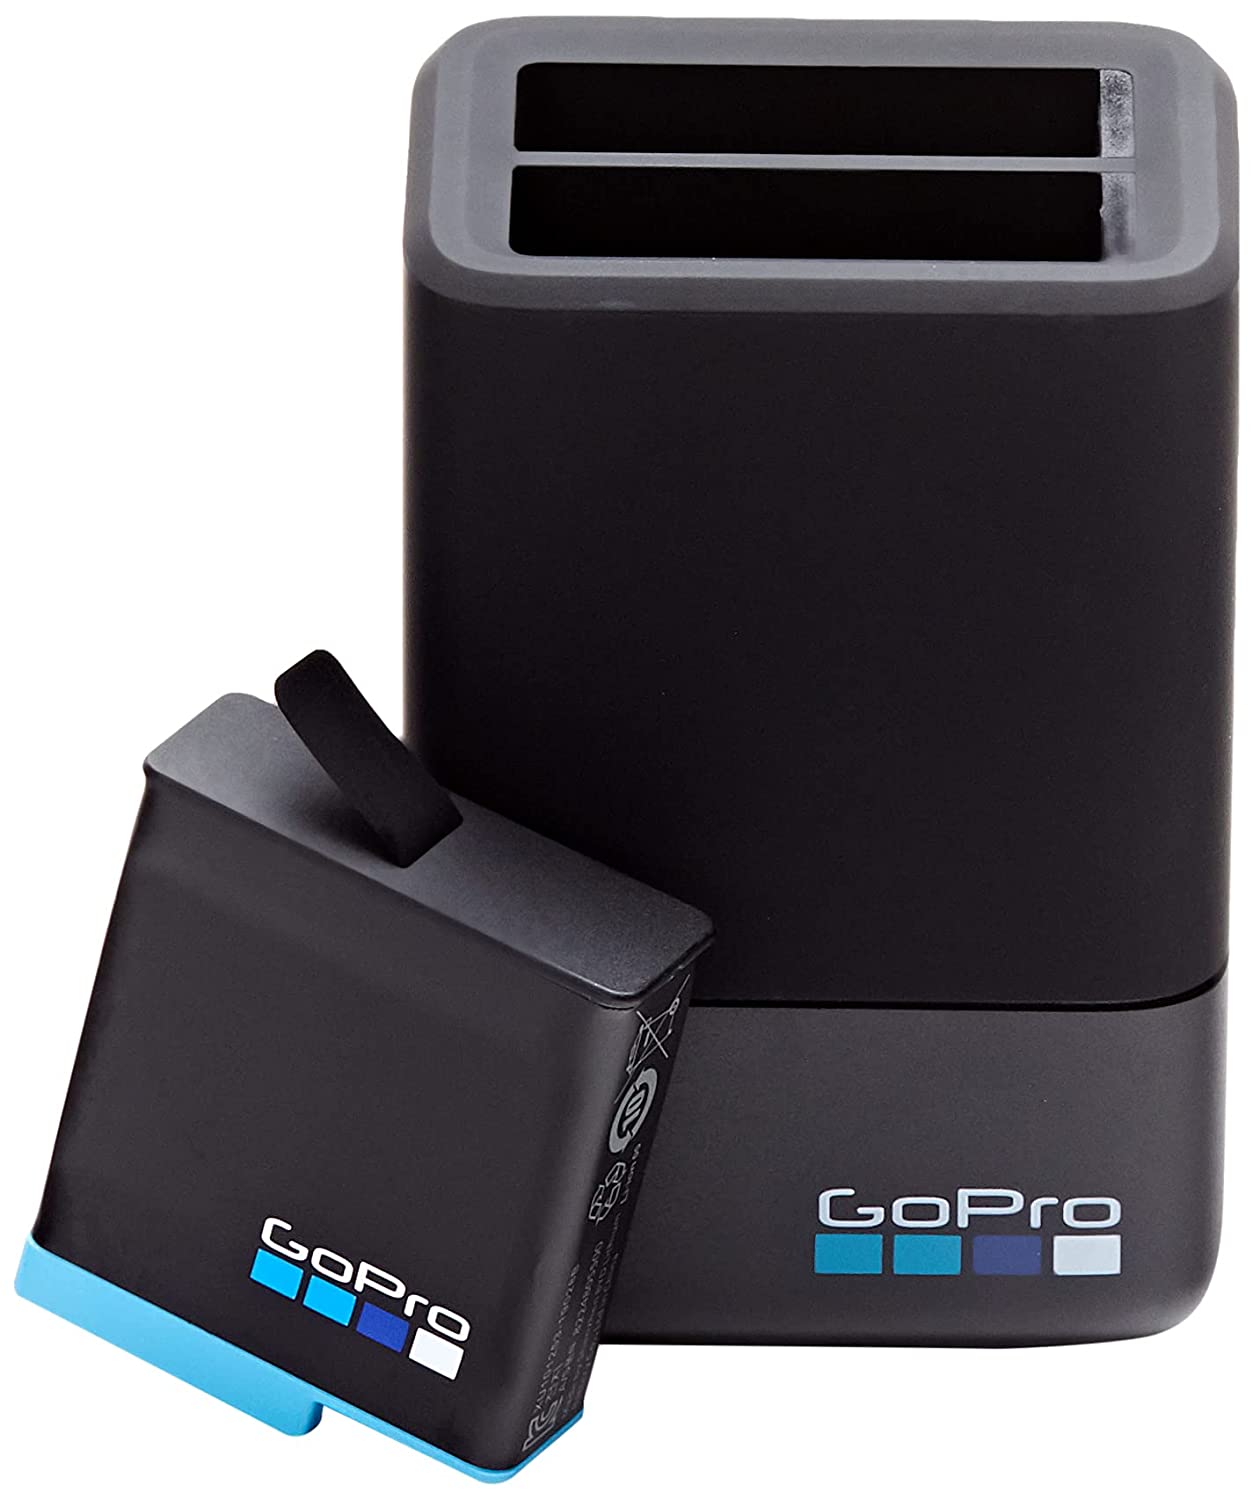 गोप्रो Ajdbd 001 ईयू डुअल बैटरी चार्जर प्लस अतिरिक्त बैटरी